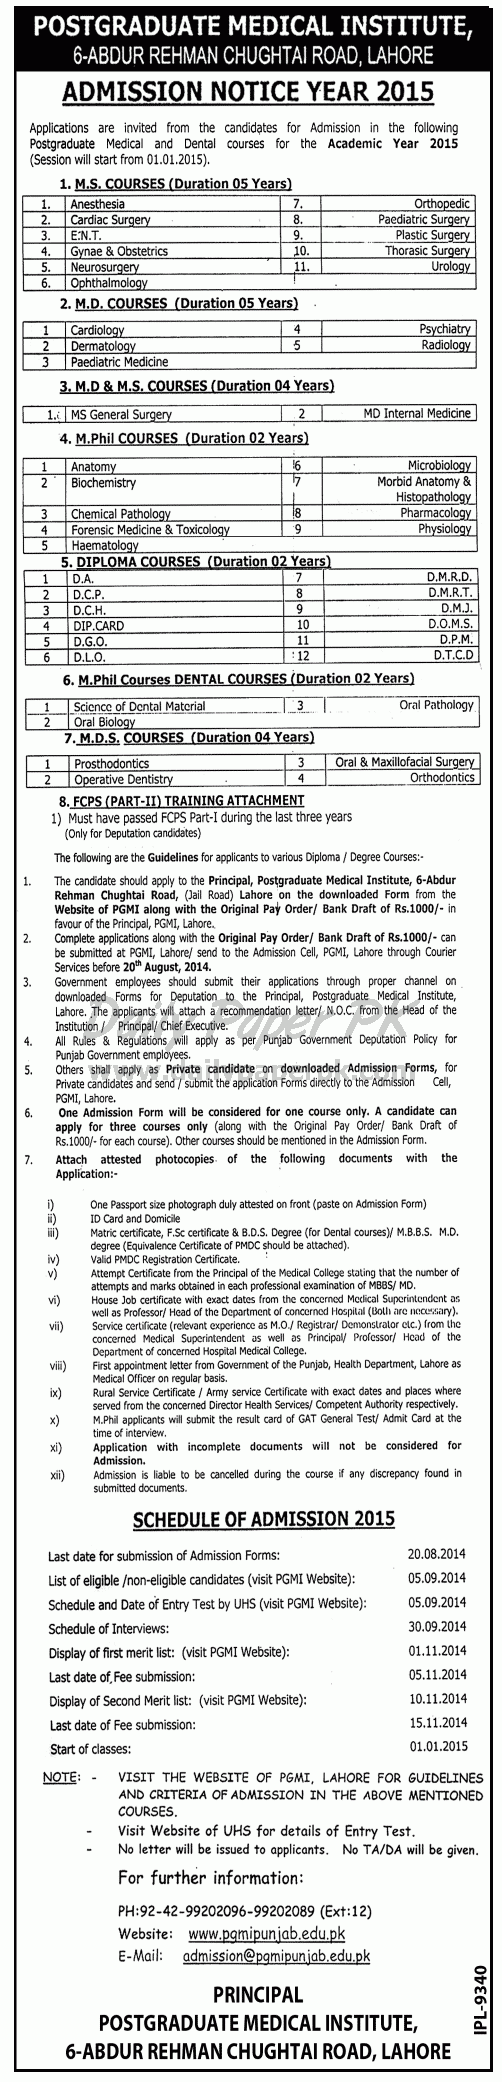 Postgraduate Medical Institute (PGMI) Lahore Admission Notice 2015 for MS / MD / MDS / M.Phil & Diploma Courses